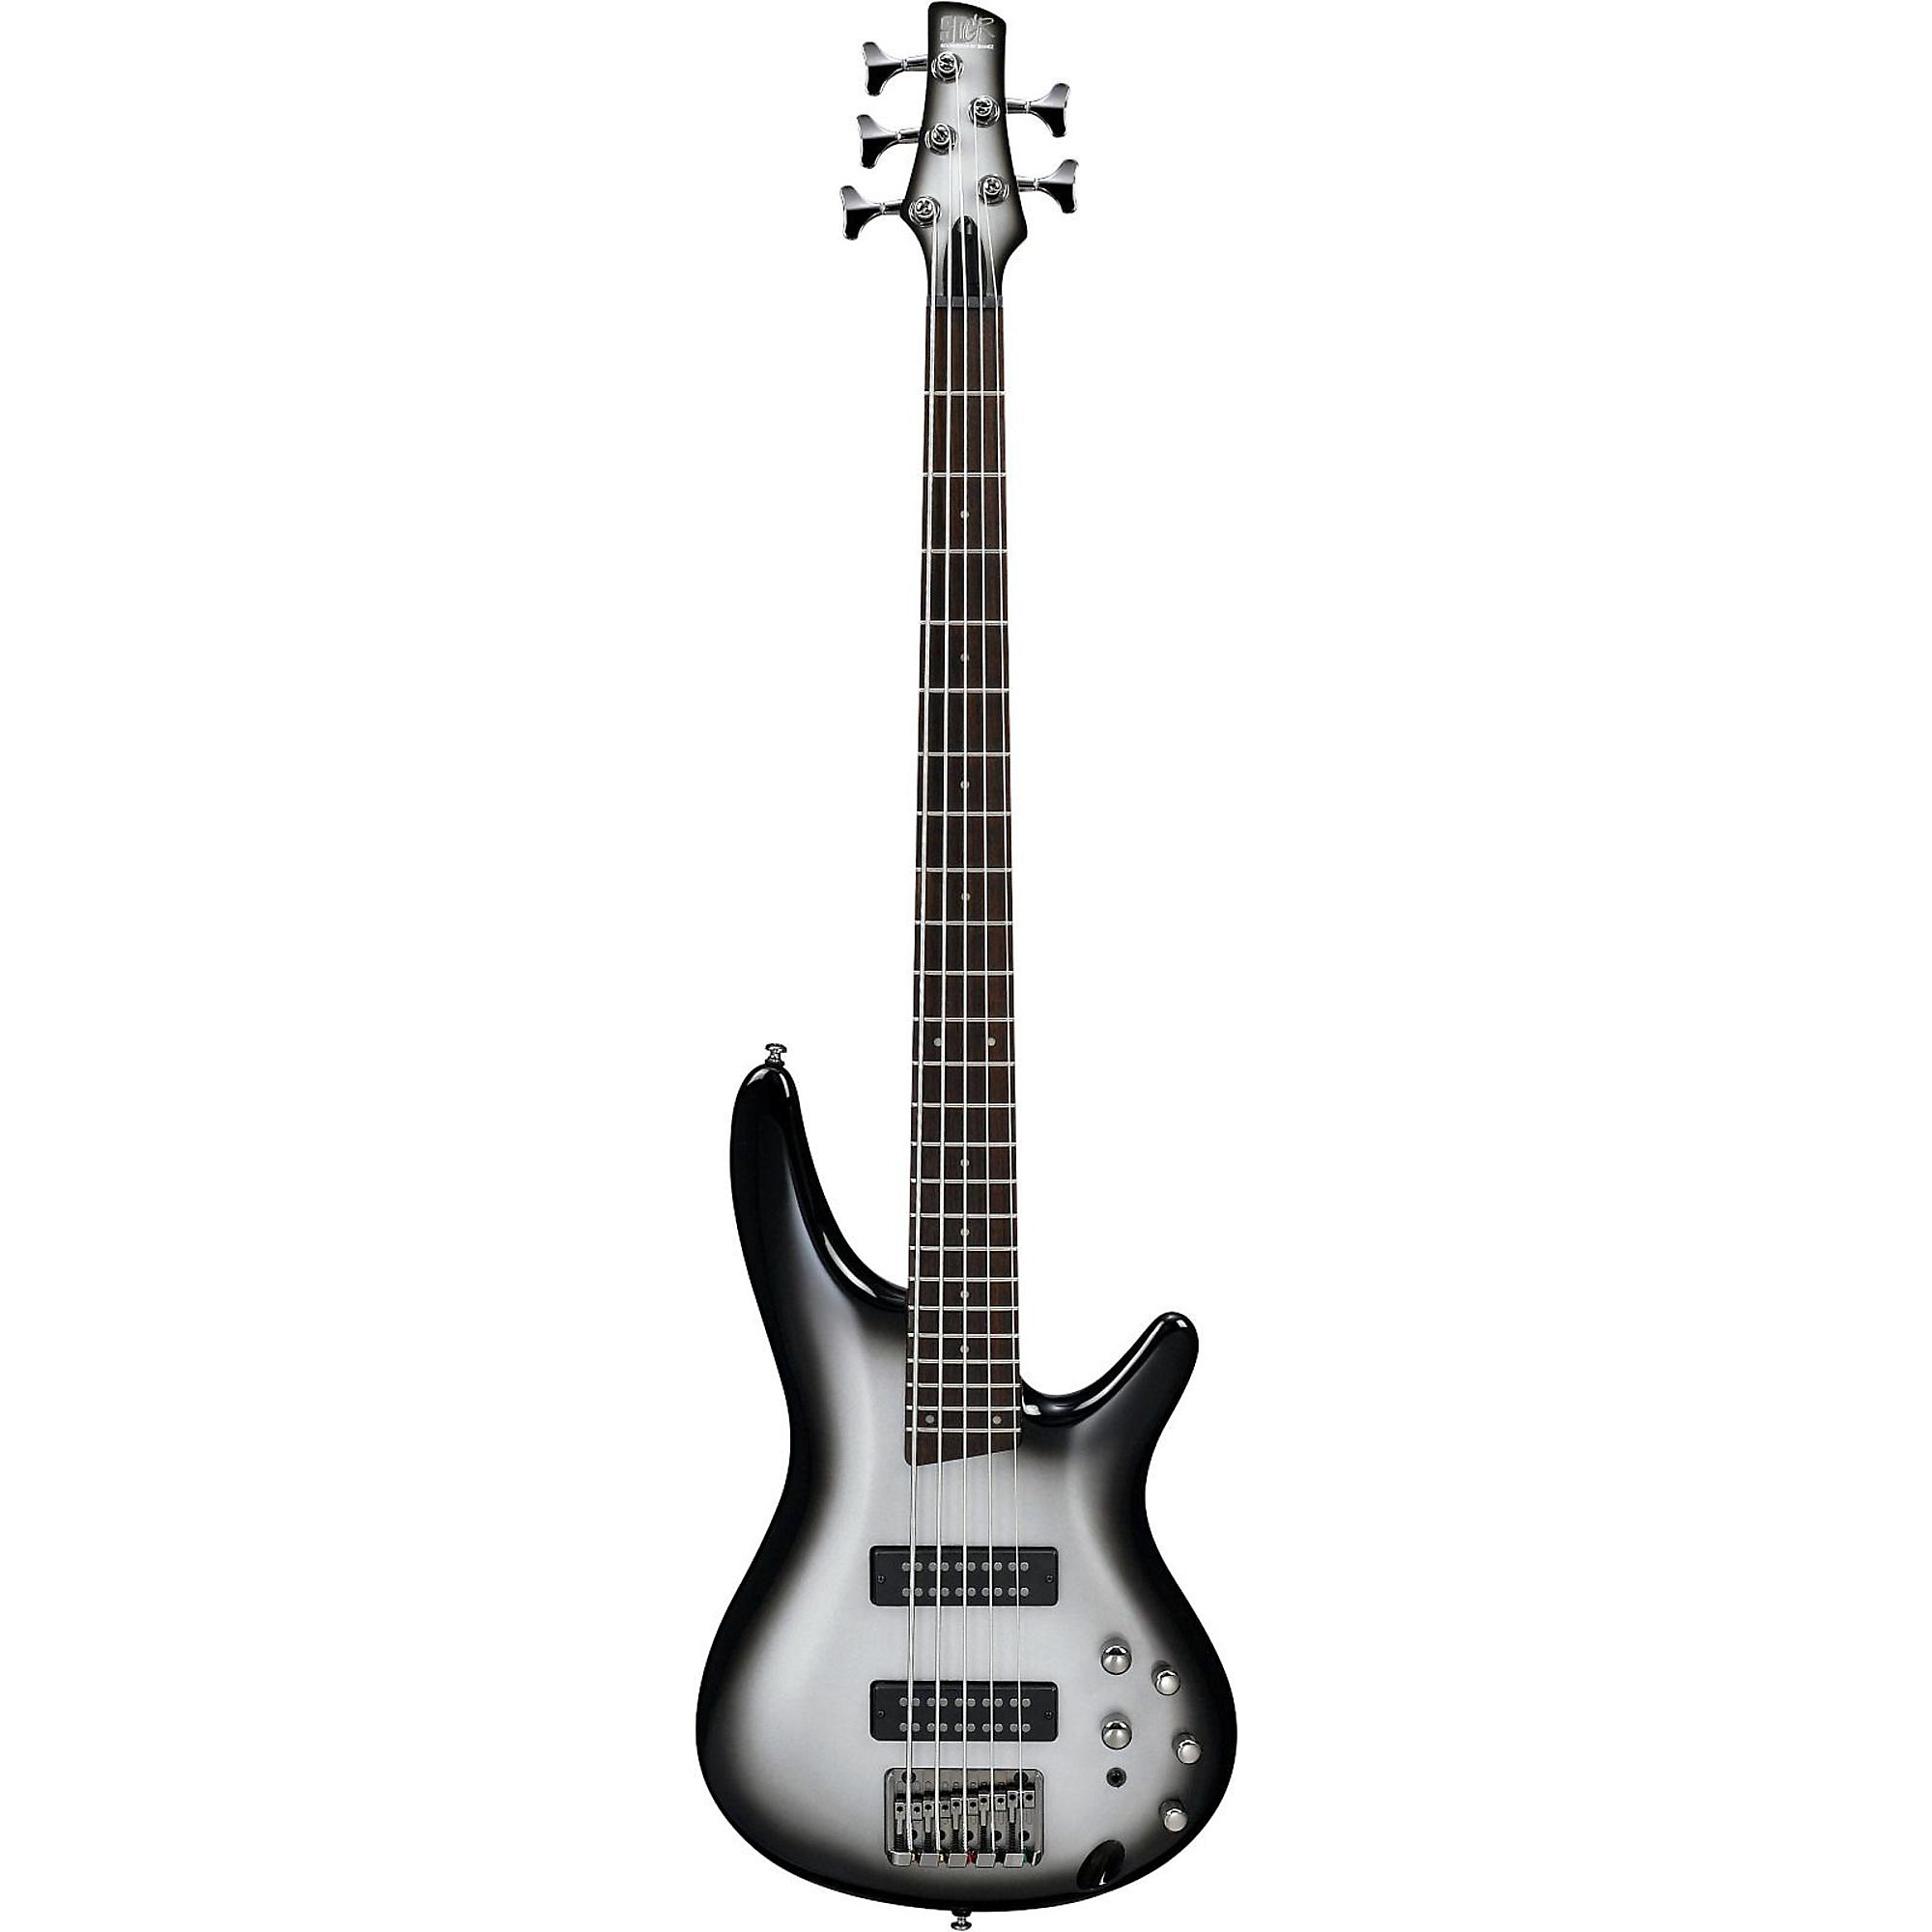 Ibanez SR305E 5-струнная электробас-гитара серебристого цвета металлик